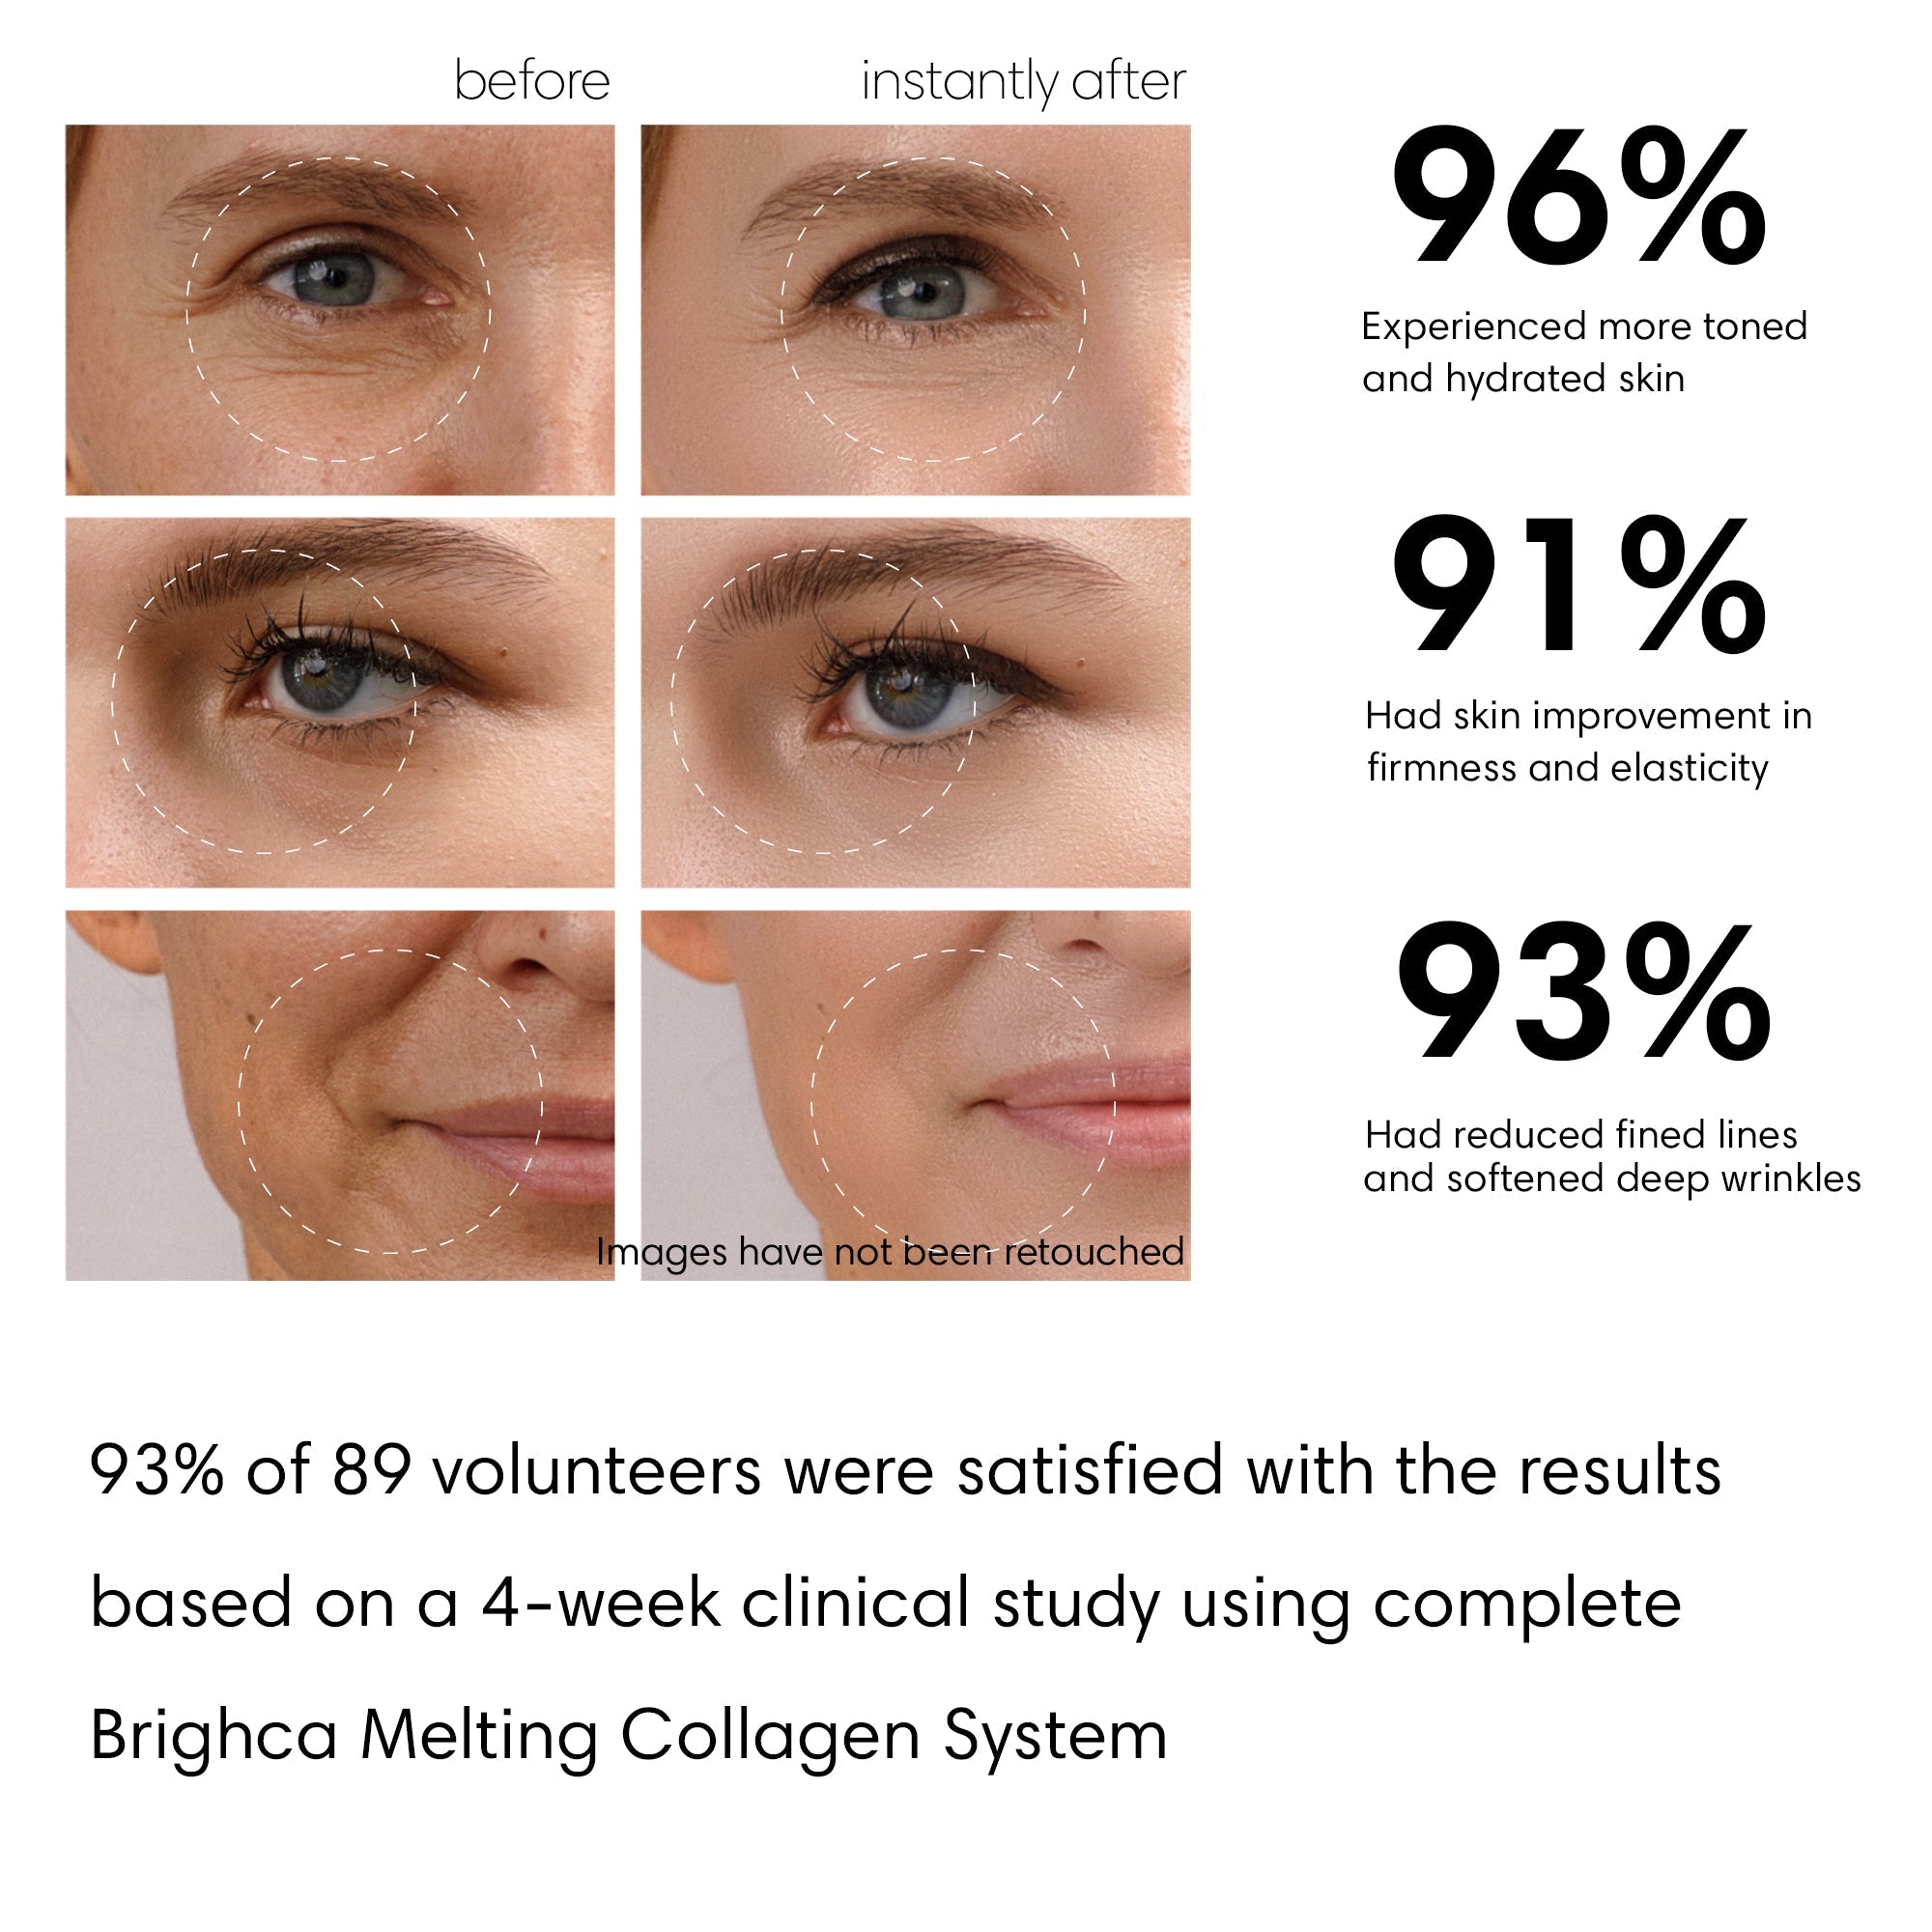 Brighca Melting Collagen Set Before and After result